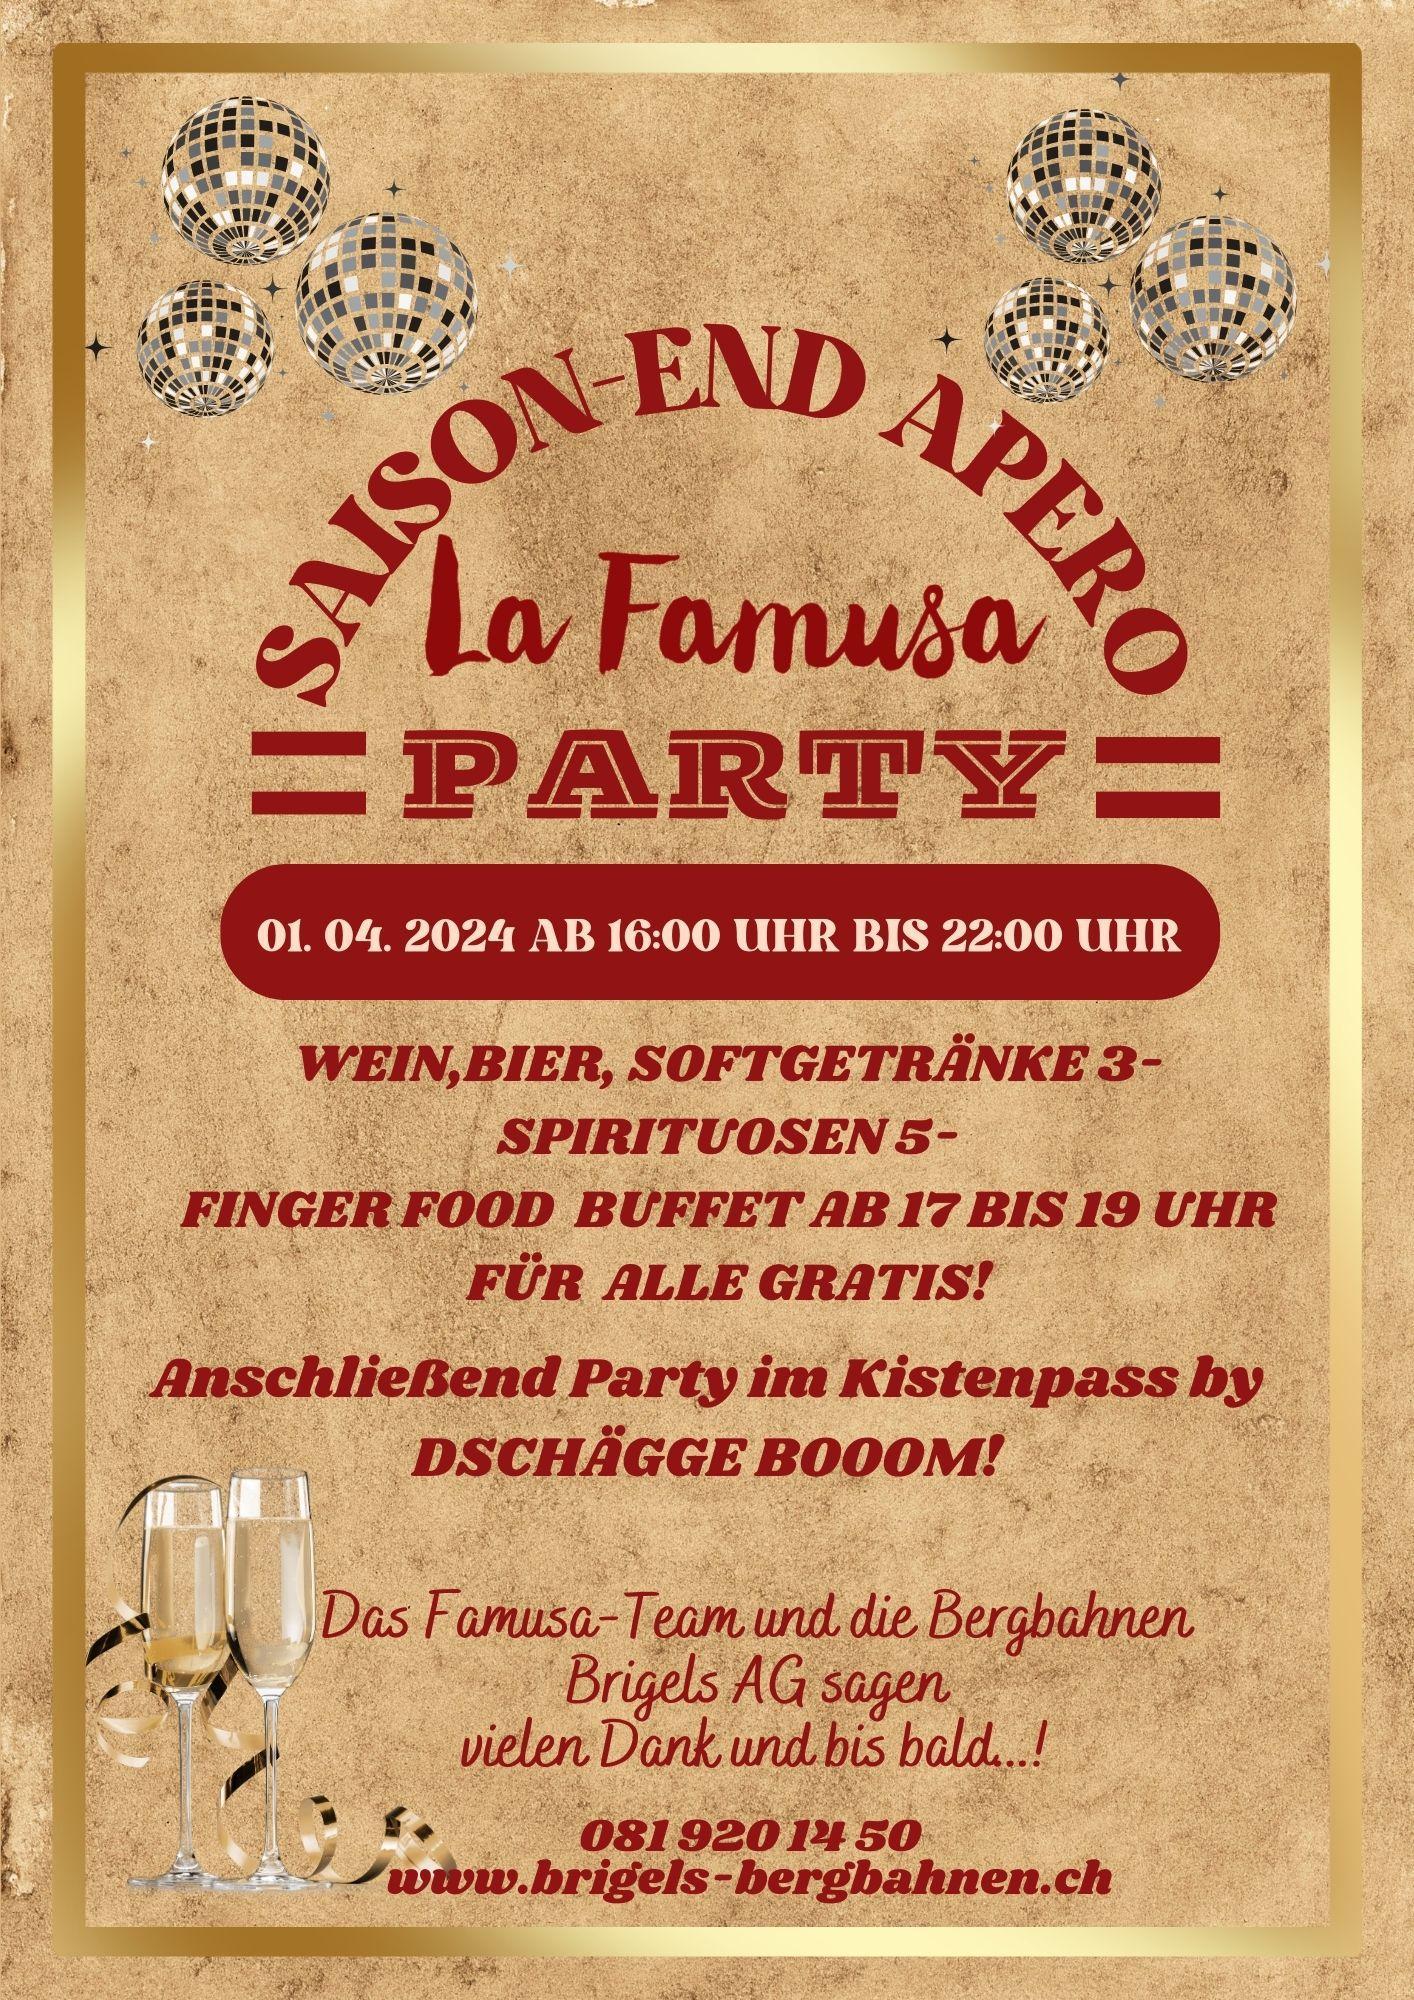 Saison End - Austrinke Restaurant La Famusa 